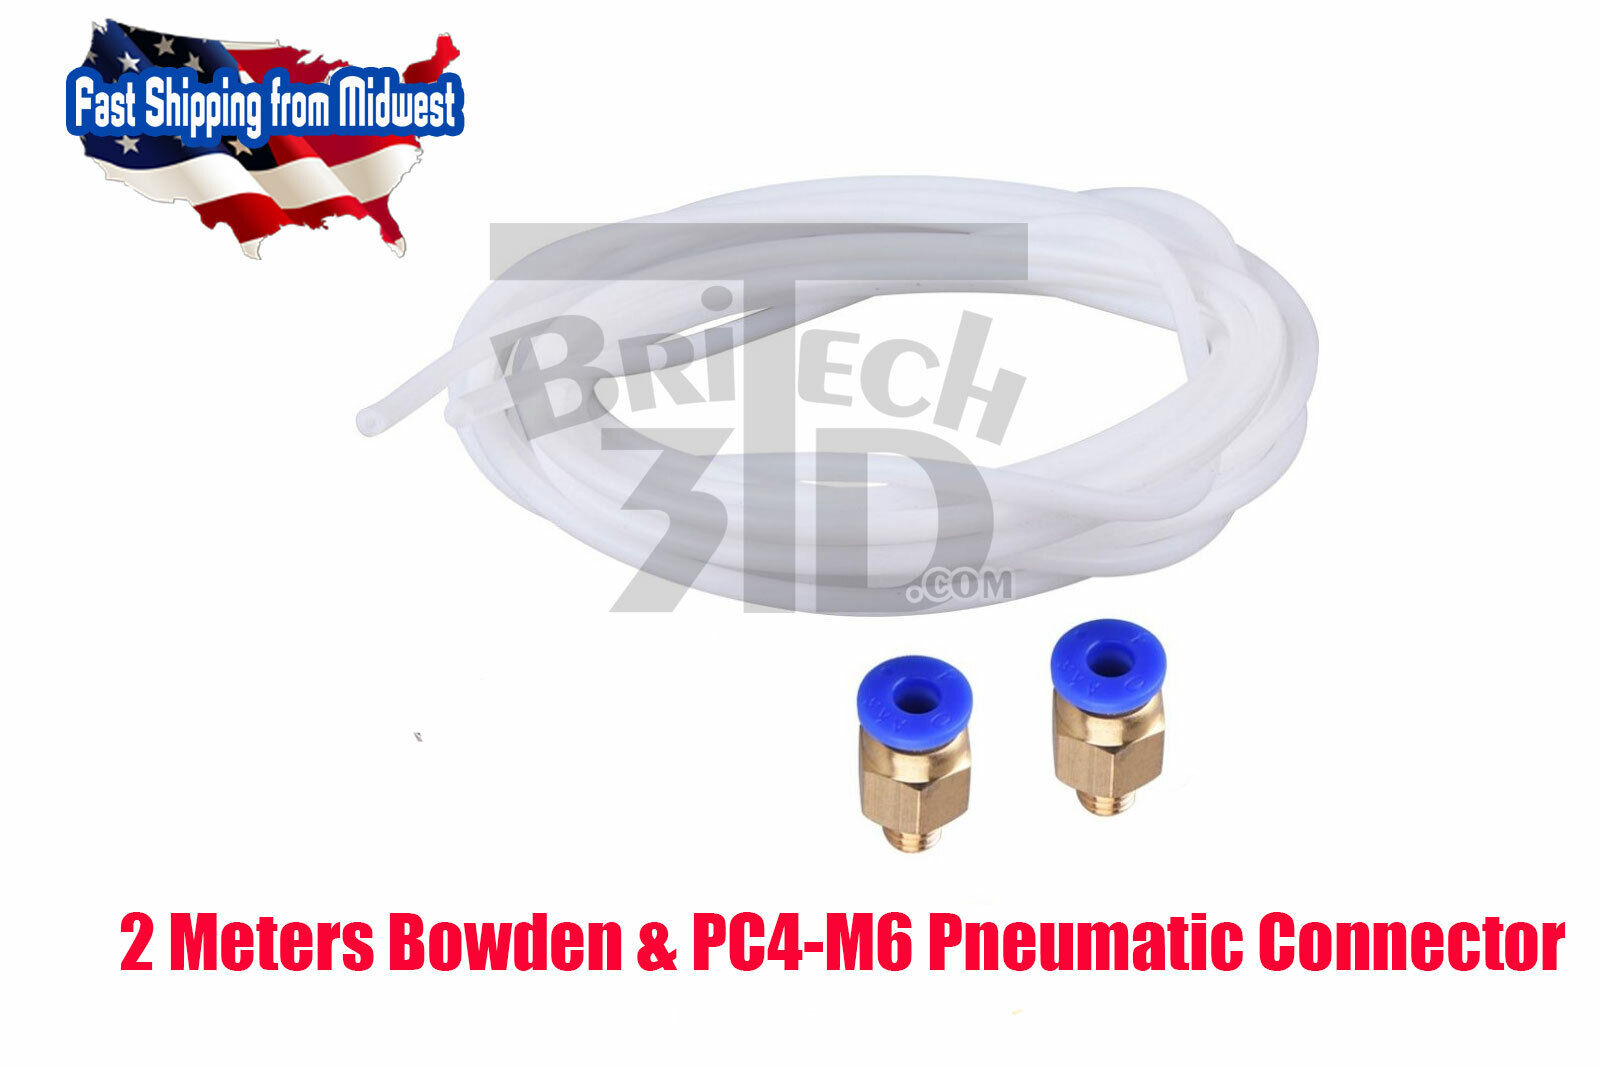 2M PTFE Teflon Tube w/2x PC4-M6 Connector RepRap 3D Printer Bowden Hotend 1.75mm